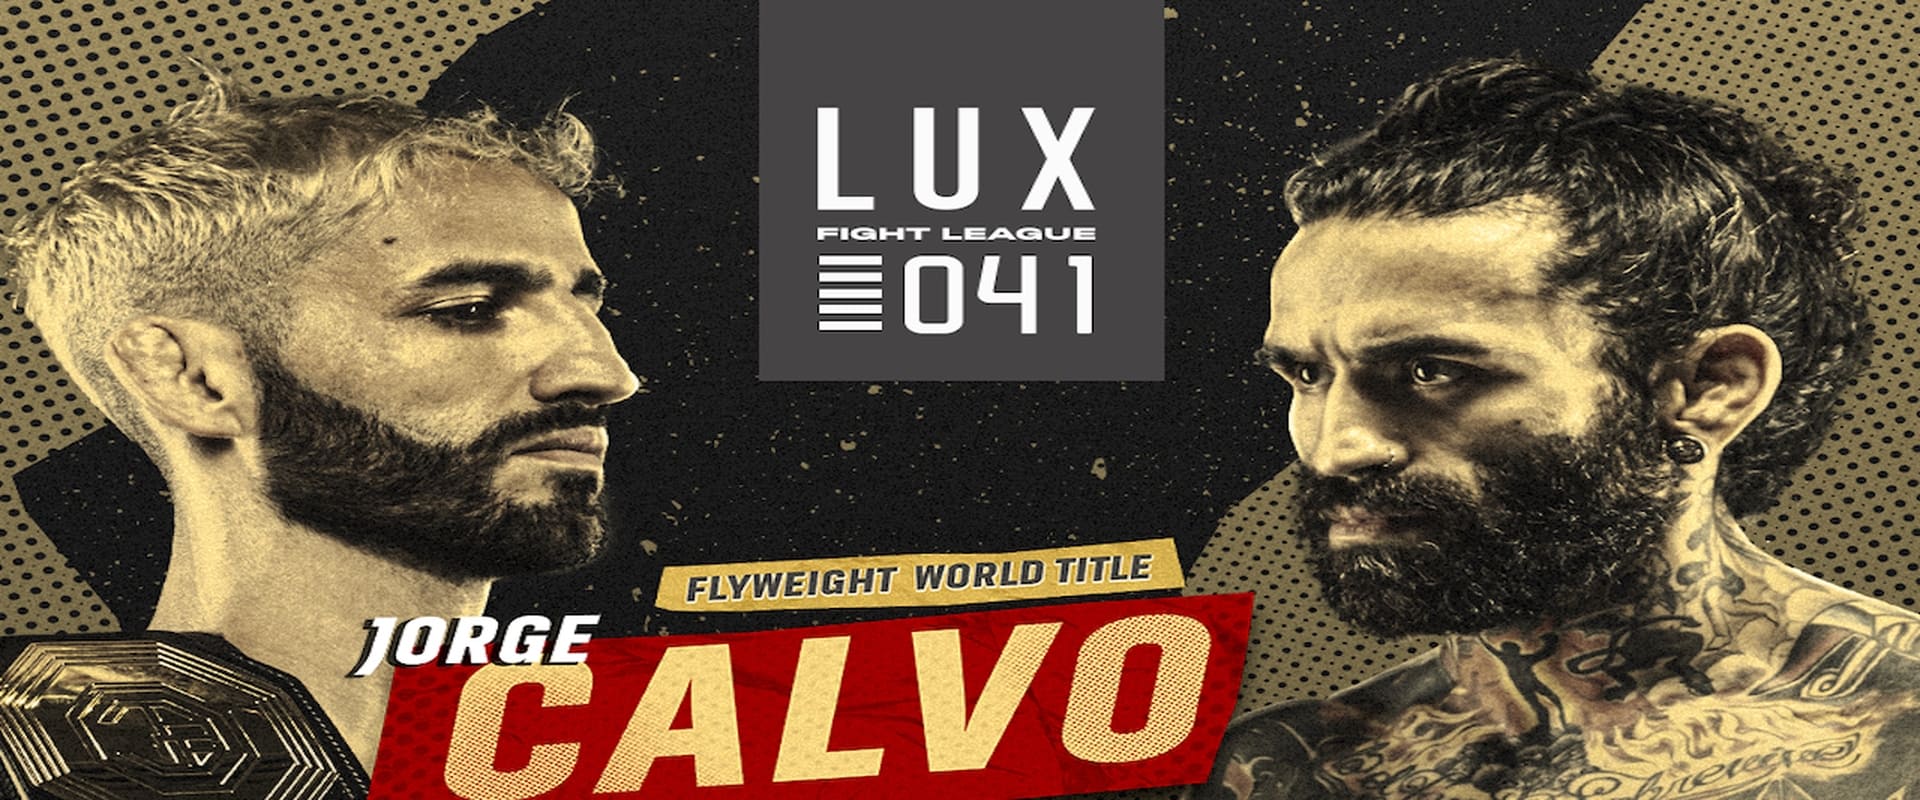 LUX Fight League 041海报